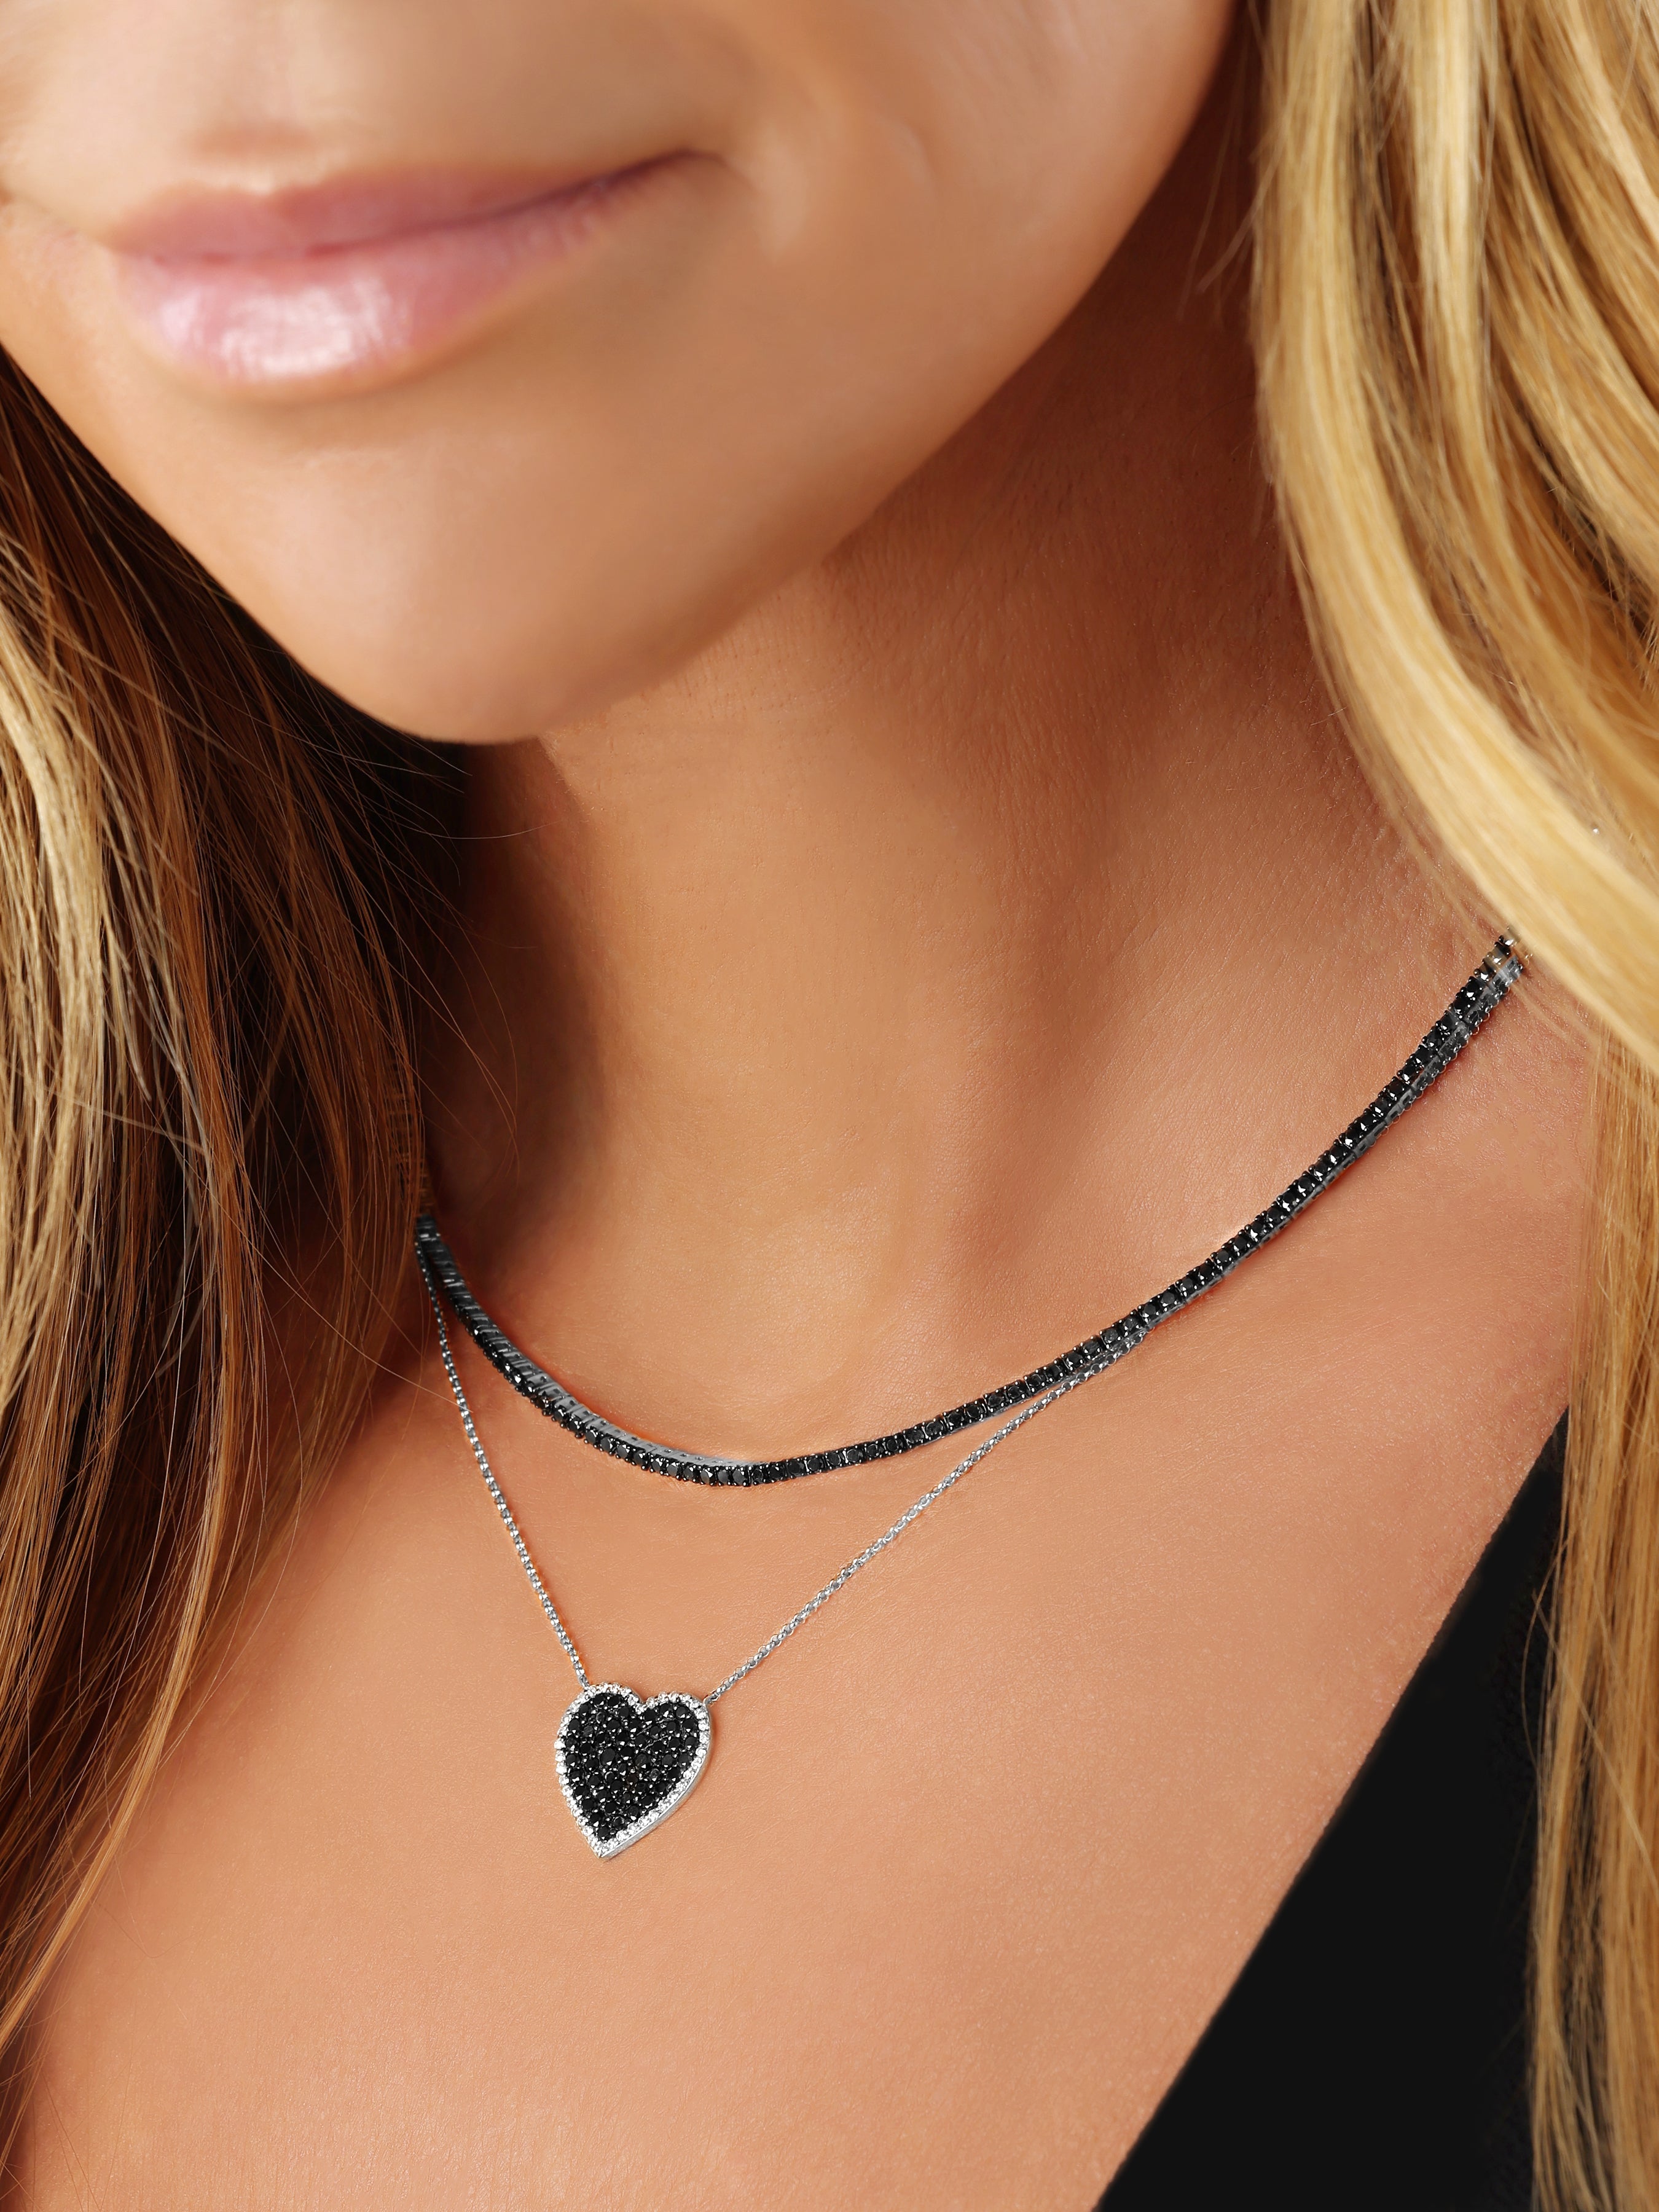 Buy Tiny Black Heart Necklace- 925 Silver – PALMONAS